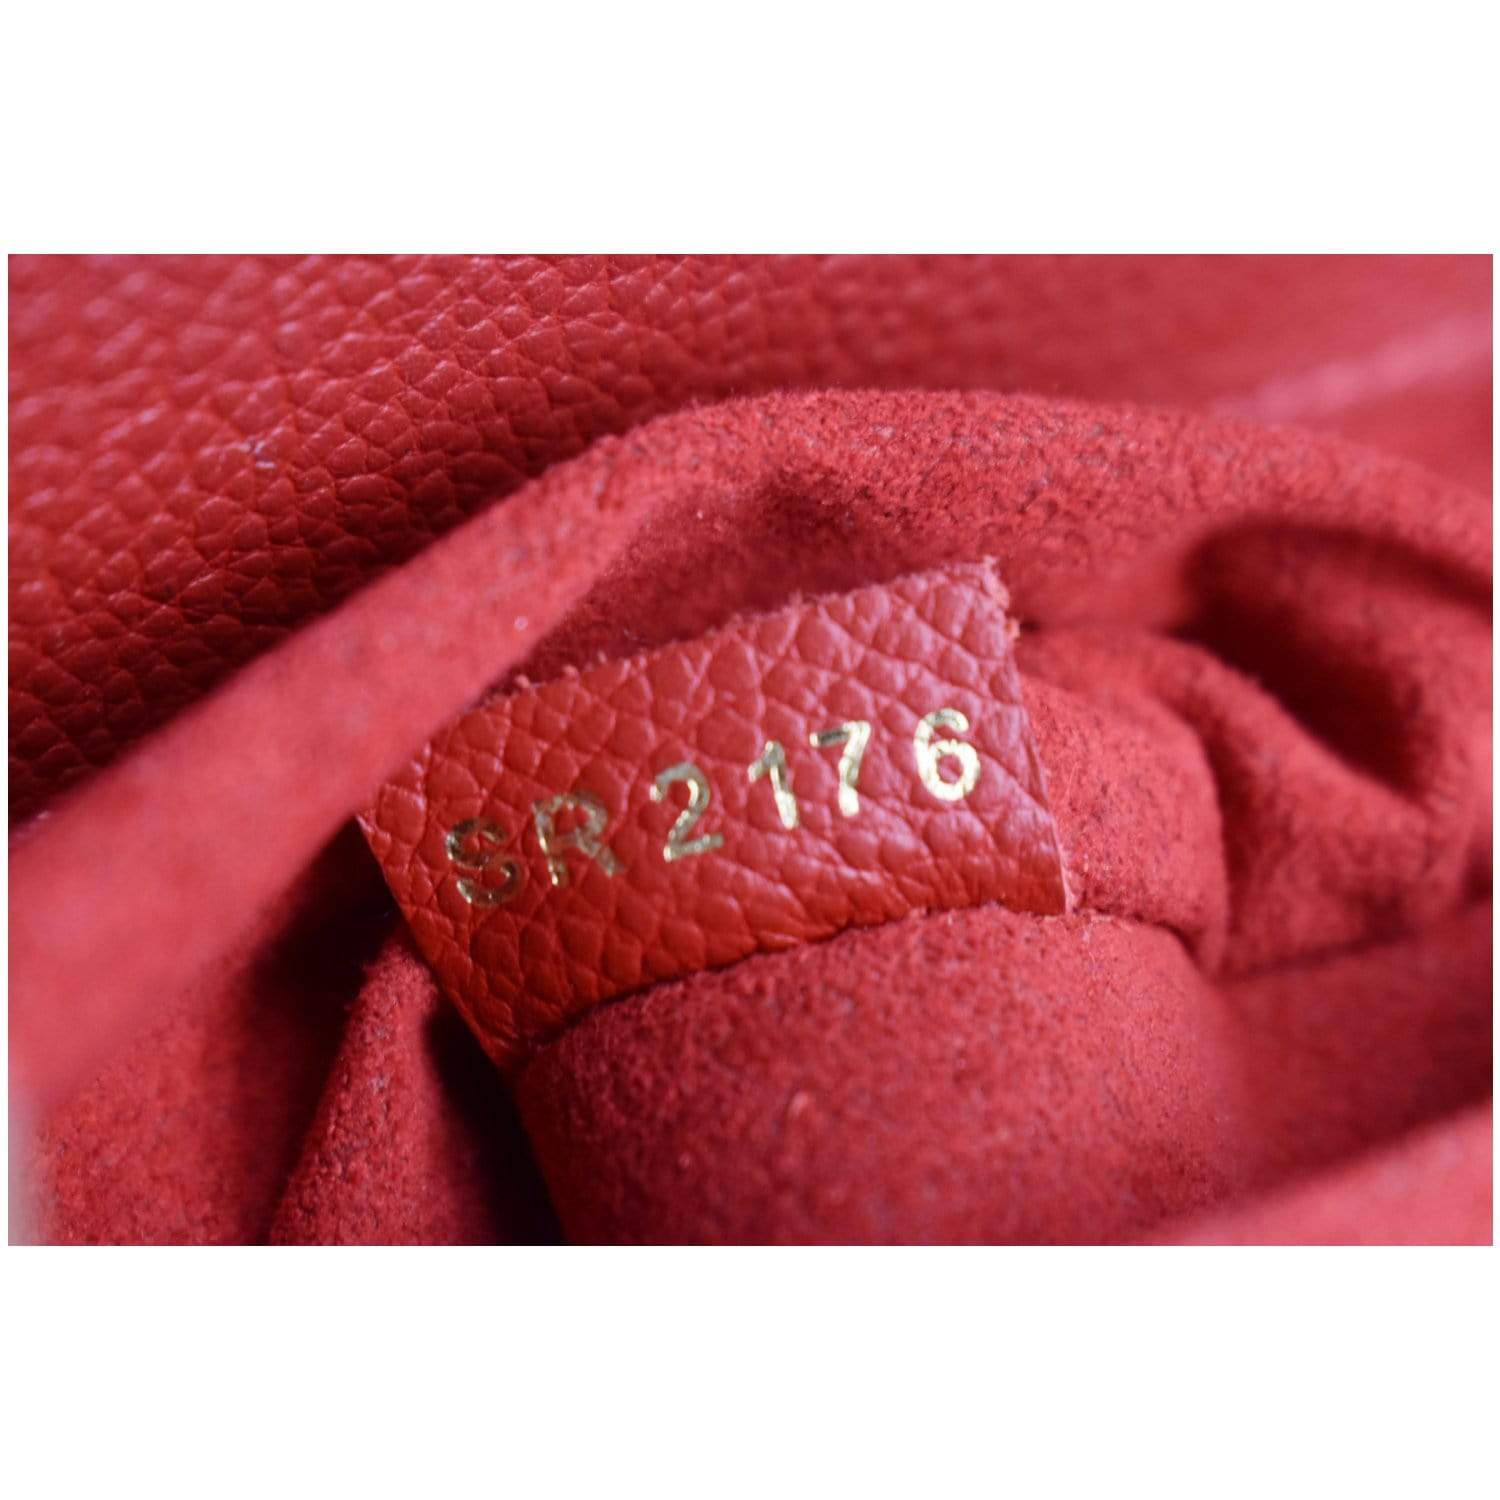 Louis Vuitton Venus Red and Monogram - THE PURSE AFFAIR